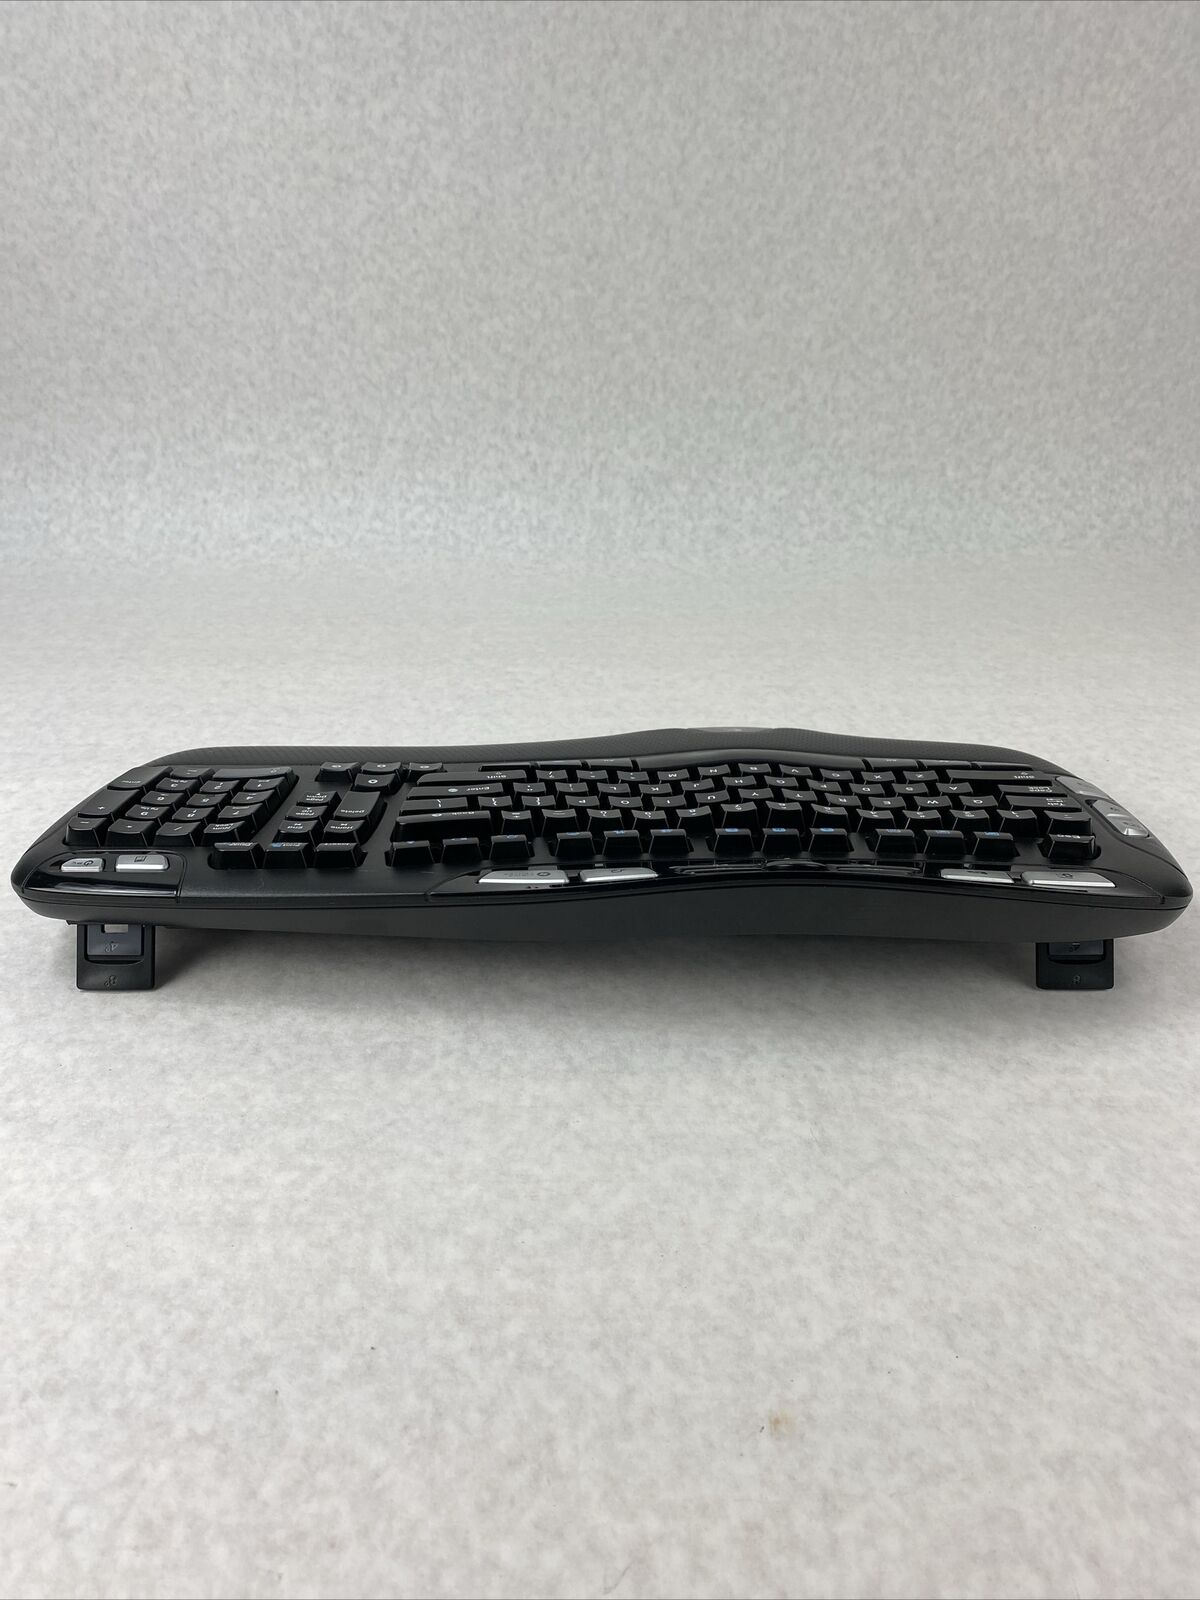 Logitech K350 Wireless Wave Keyboard w/ USB Receiver Dongle - Tested